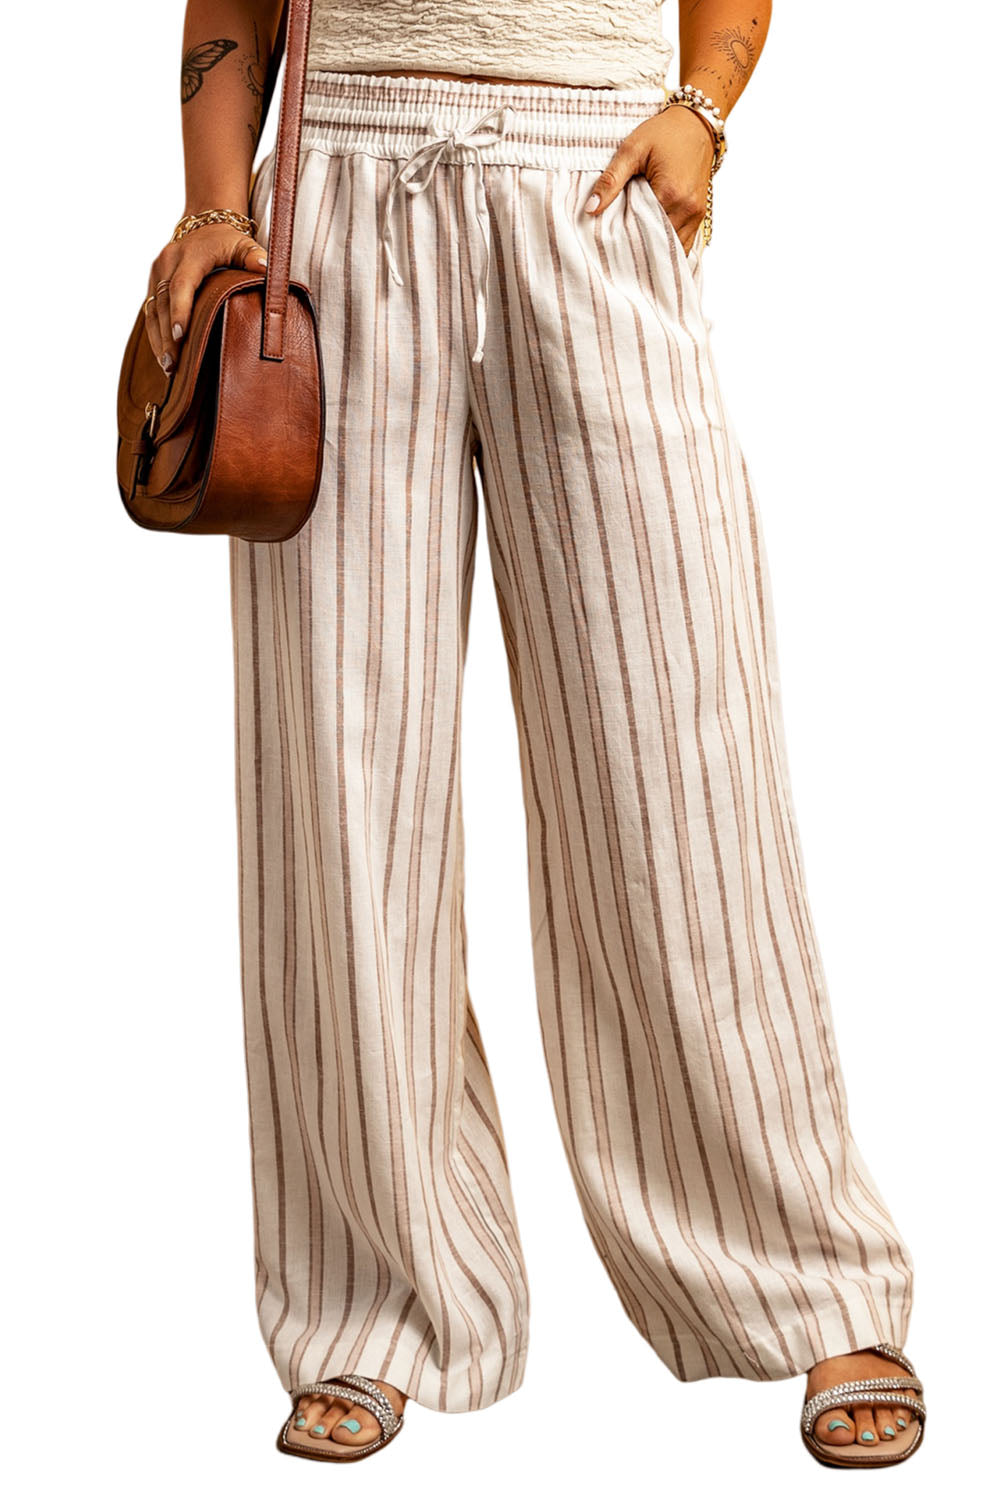 Khaki Striped Print Drawstring High Waist Casual Womens Pants - US2EInc Apparel Plug Ltd. Co